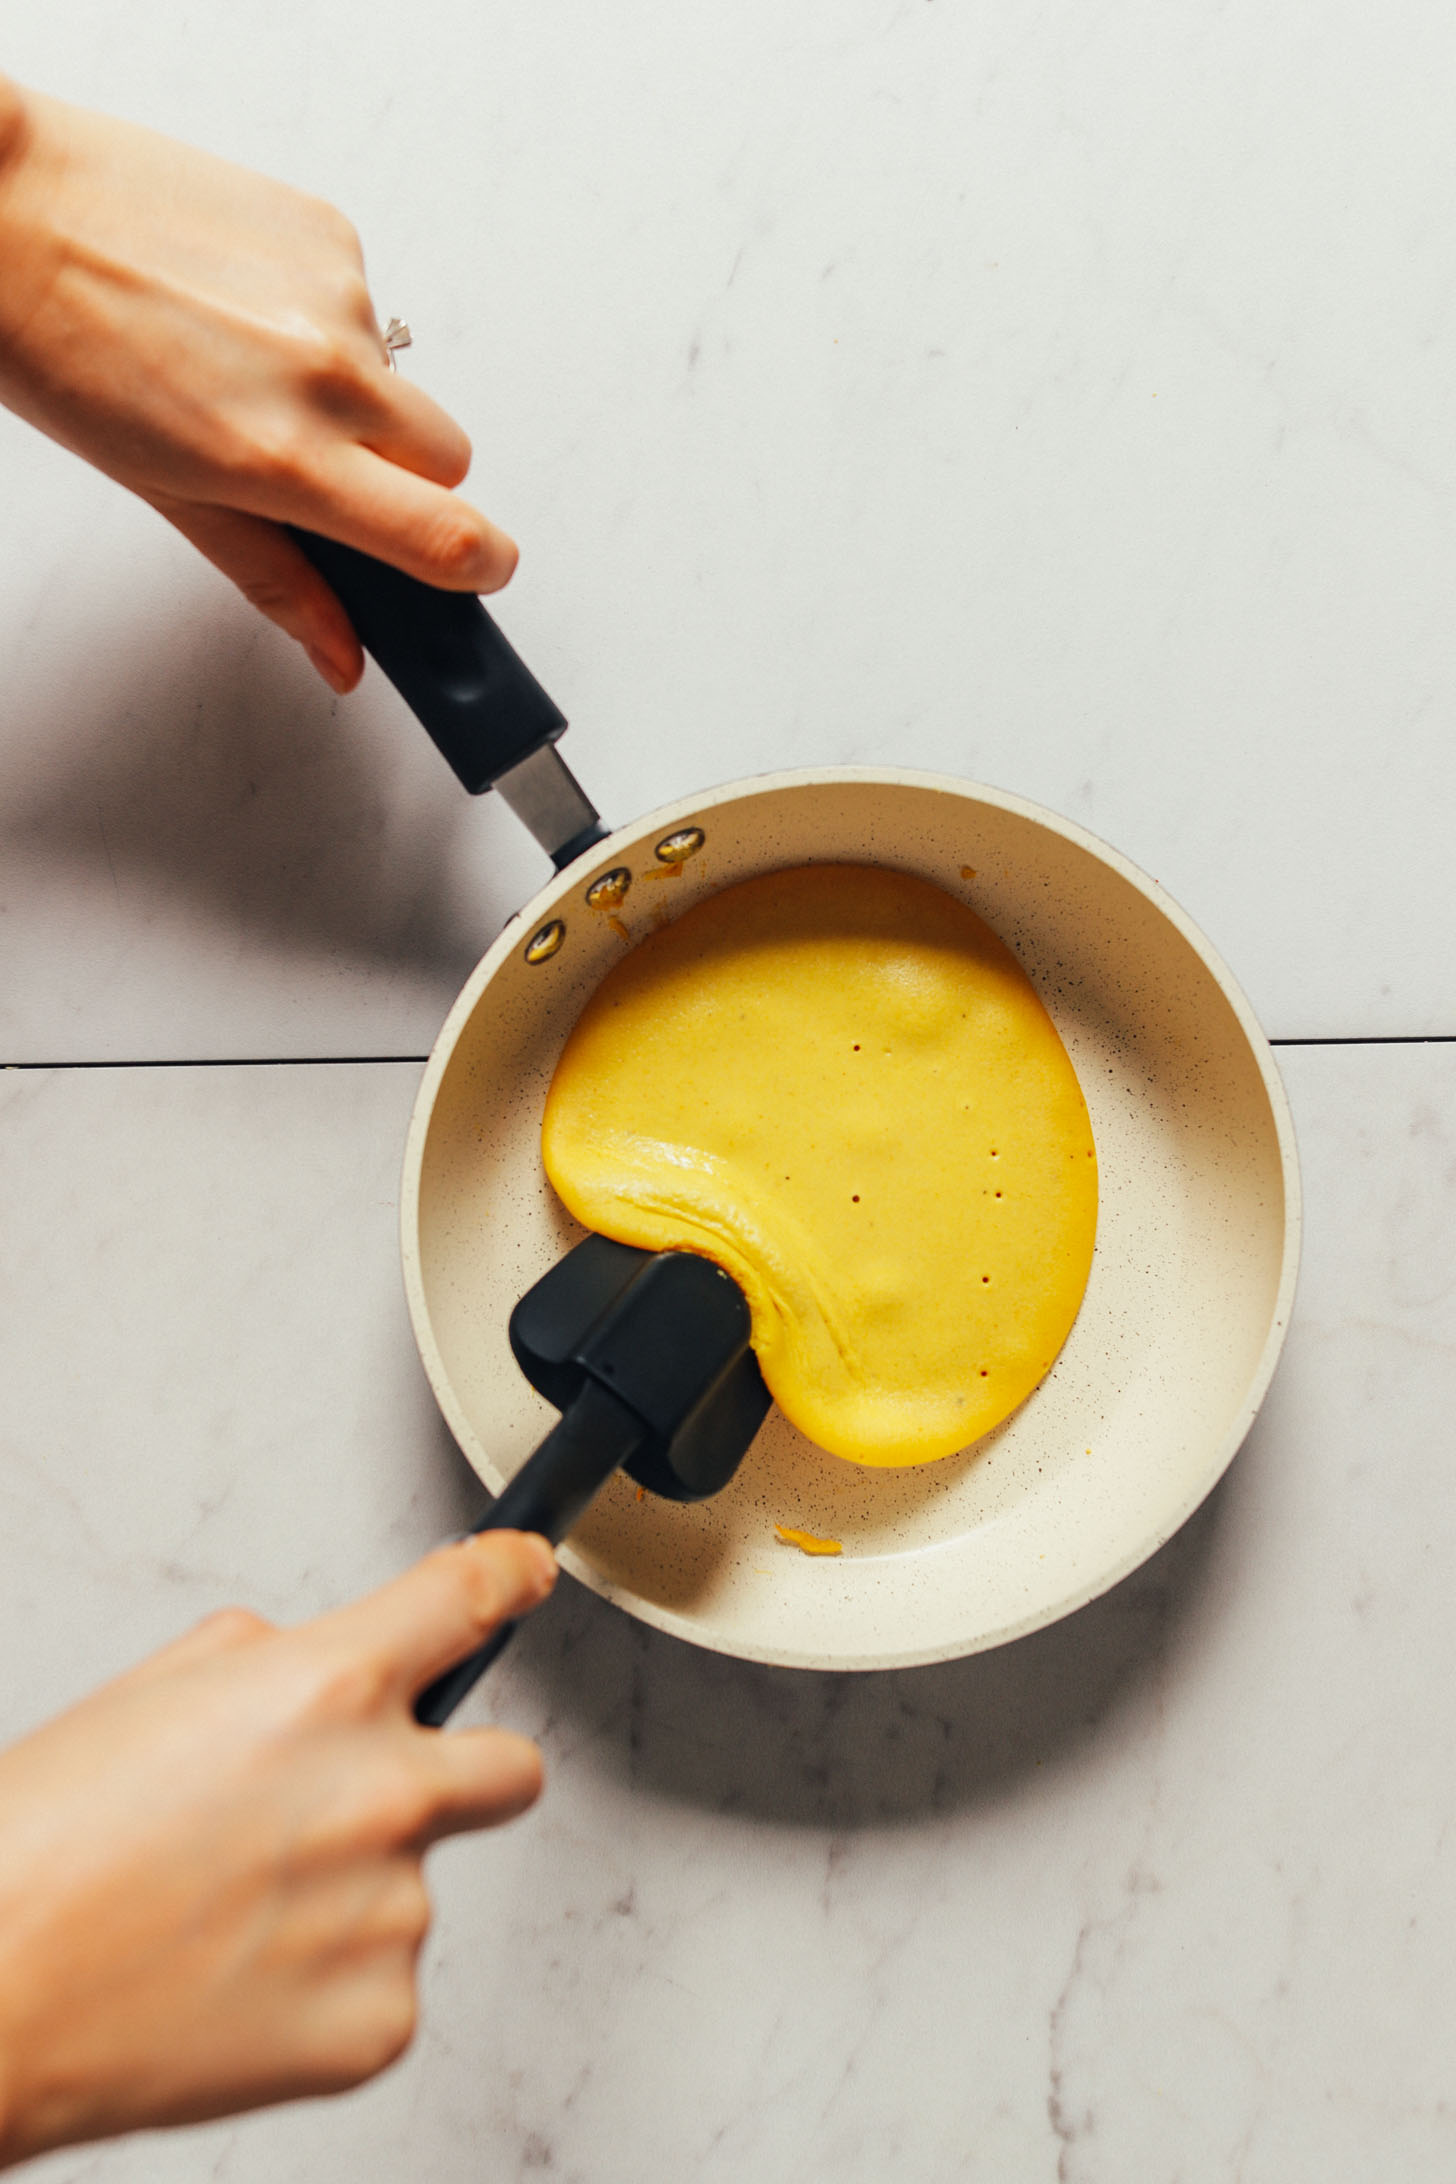 Using a non-toxic non-stick pan to cook our vegan scrambled egg recipe